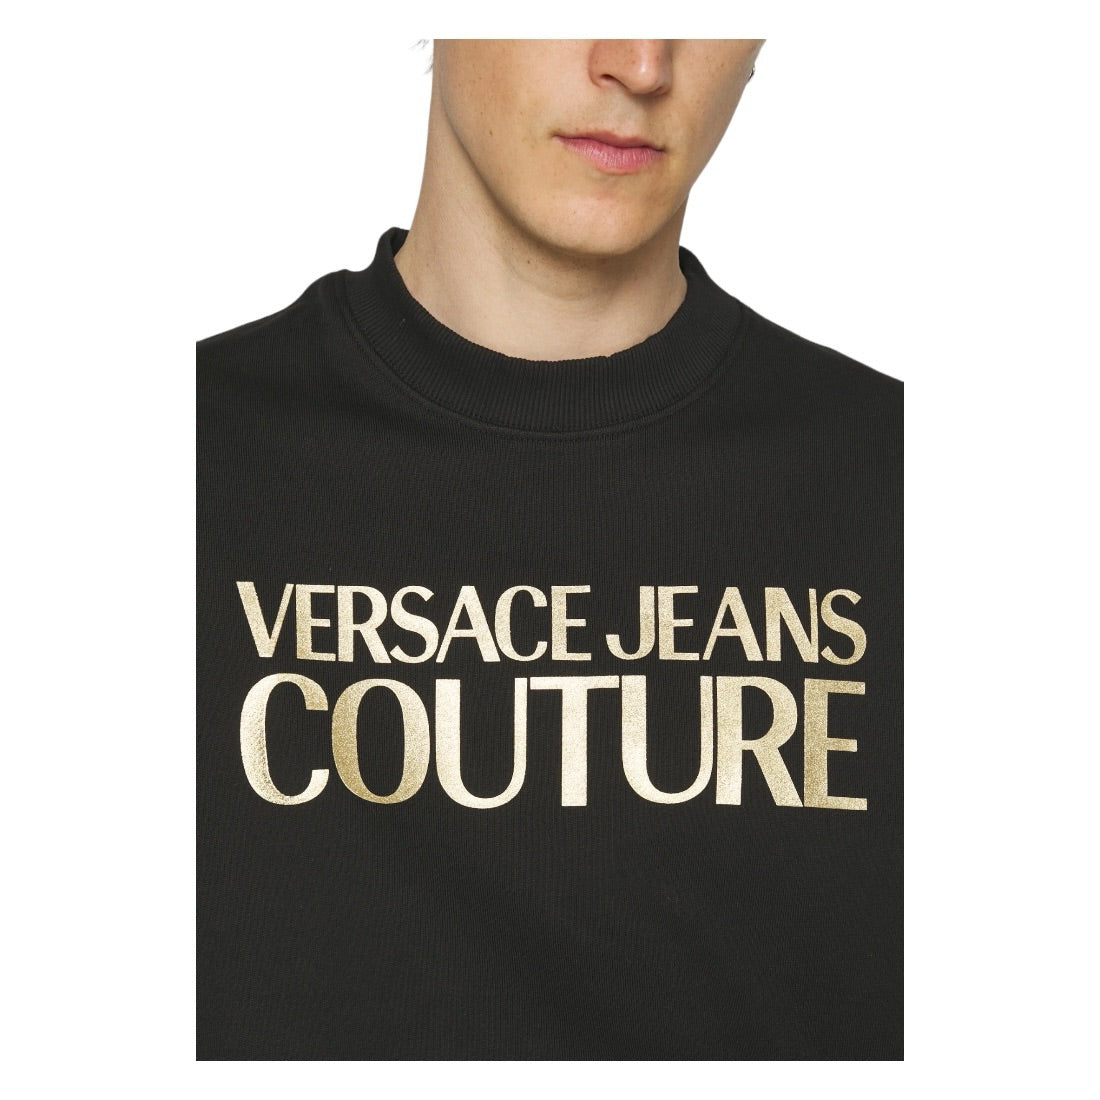 Dickes Folien-Sweatshirt mit Versace Jeans Couture-Logo